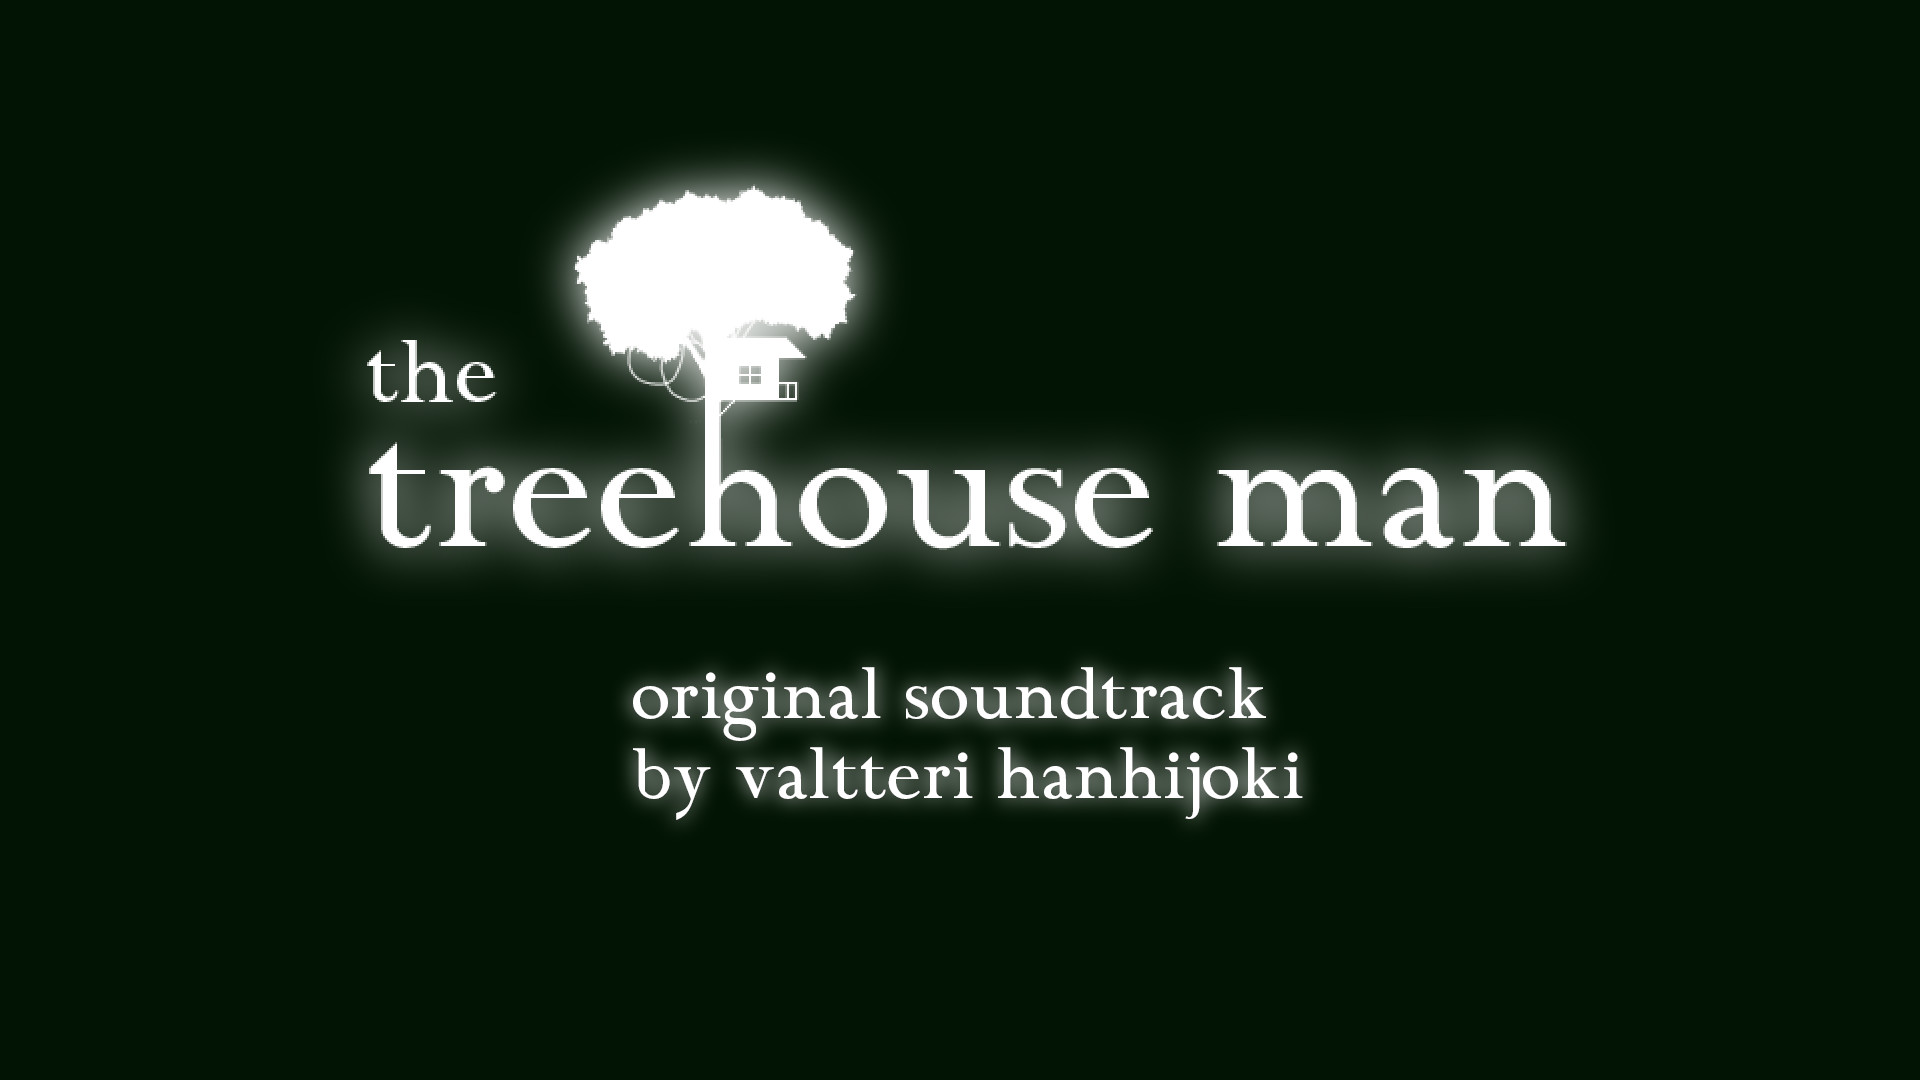 The Treehouse Man - Original Soundtrack Featured Screenshot #1